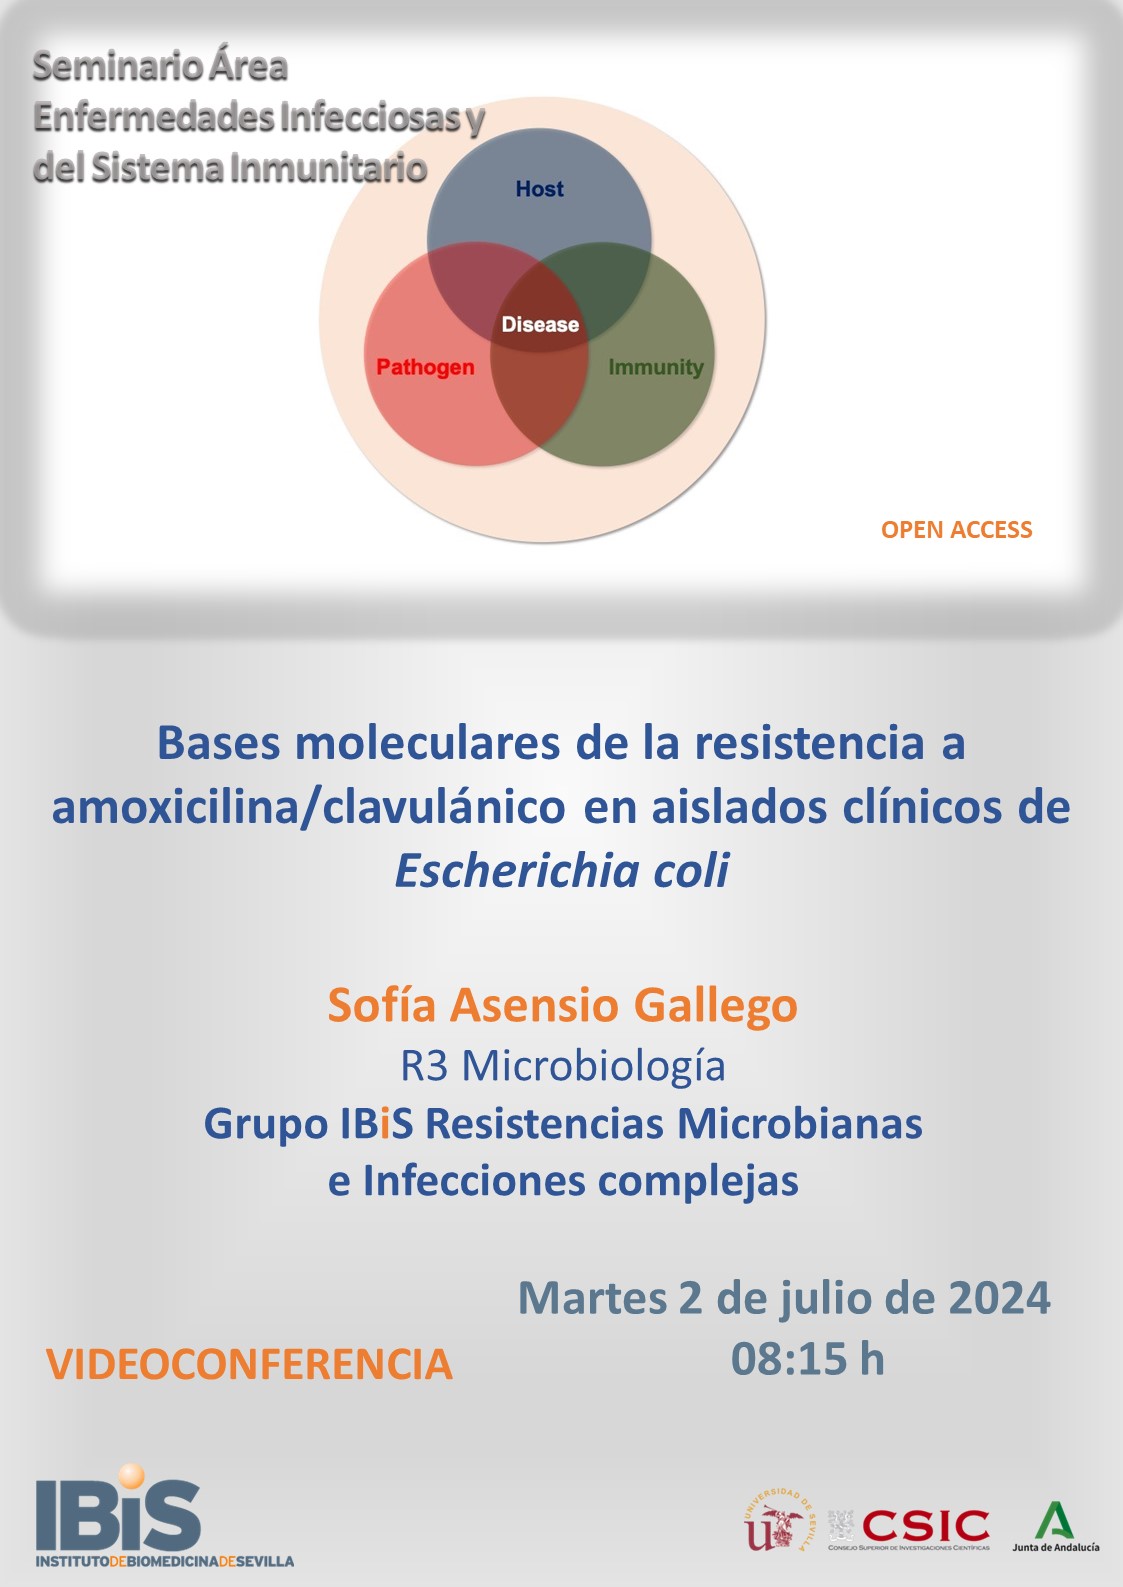 Poster: Bases moleculares de la resistencia a amoxicilina/clavulánico en aislados clínicos de *Escherichia coli*